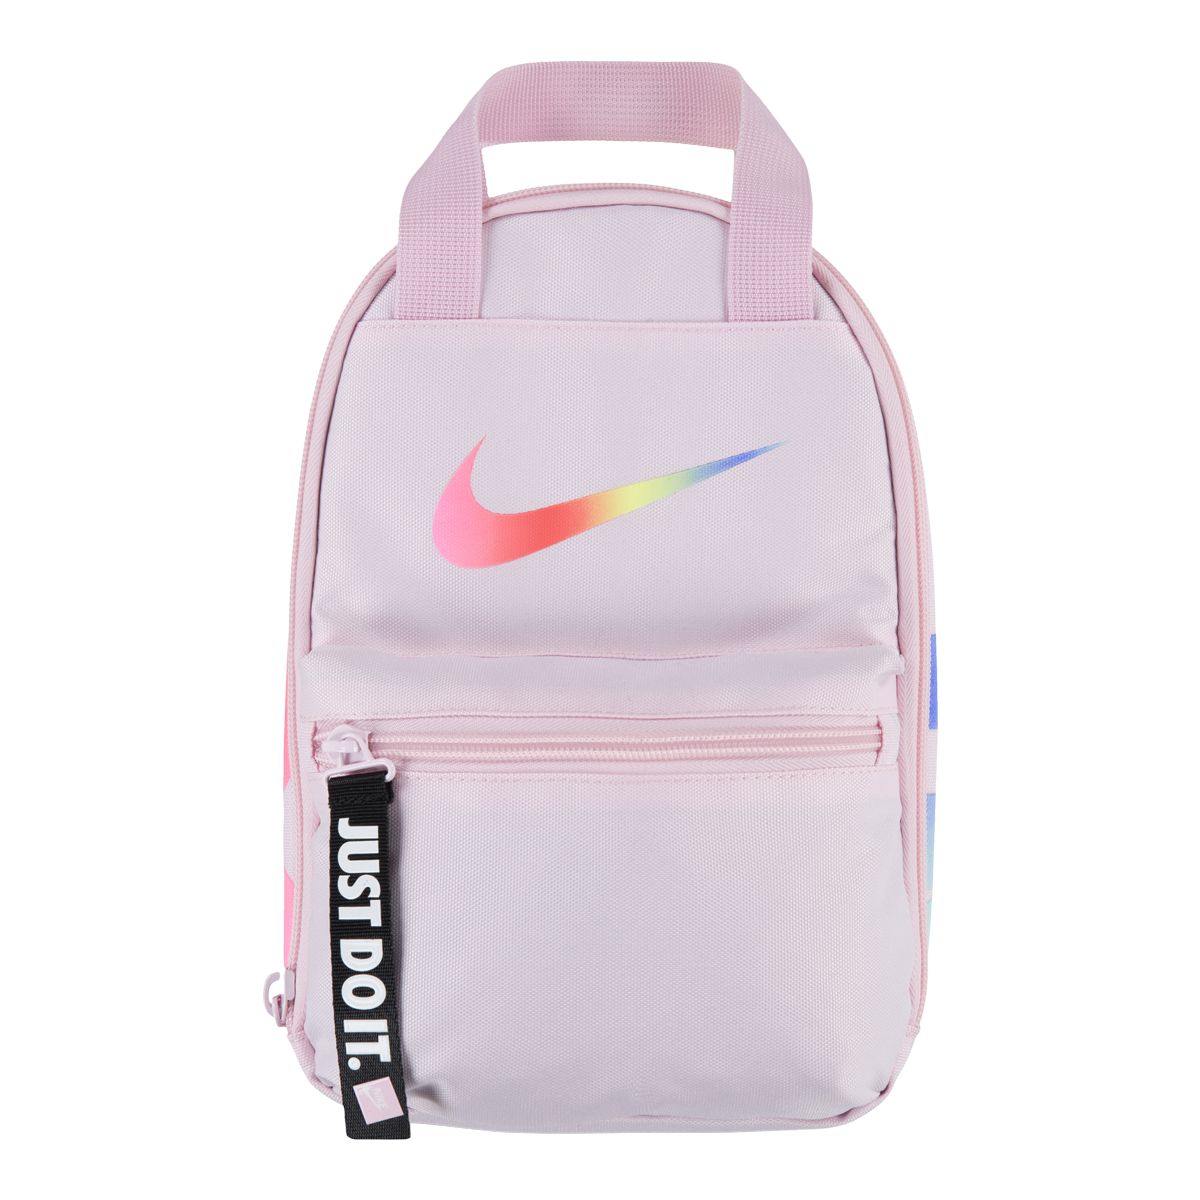 Nike Shine Lunch Bag